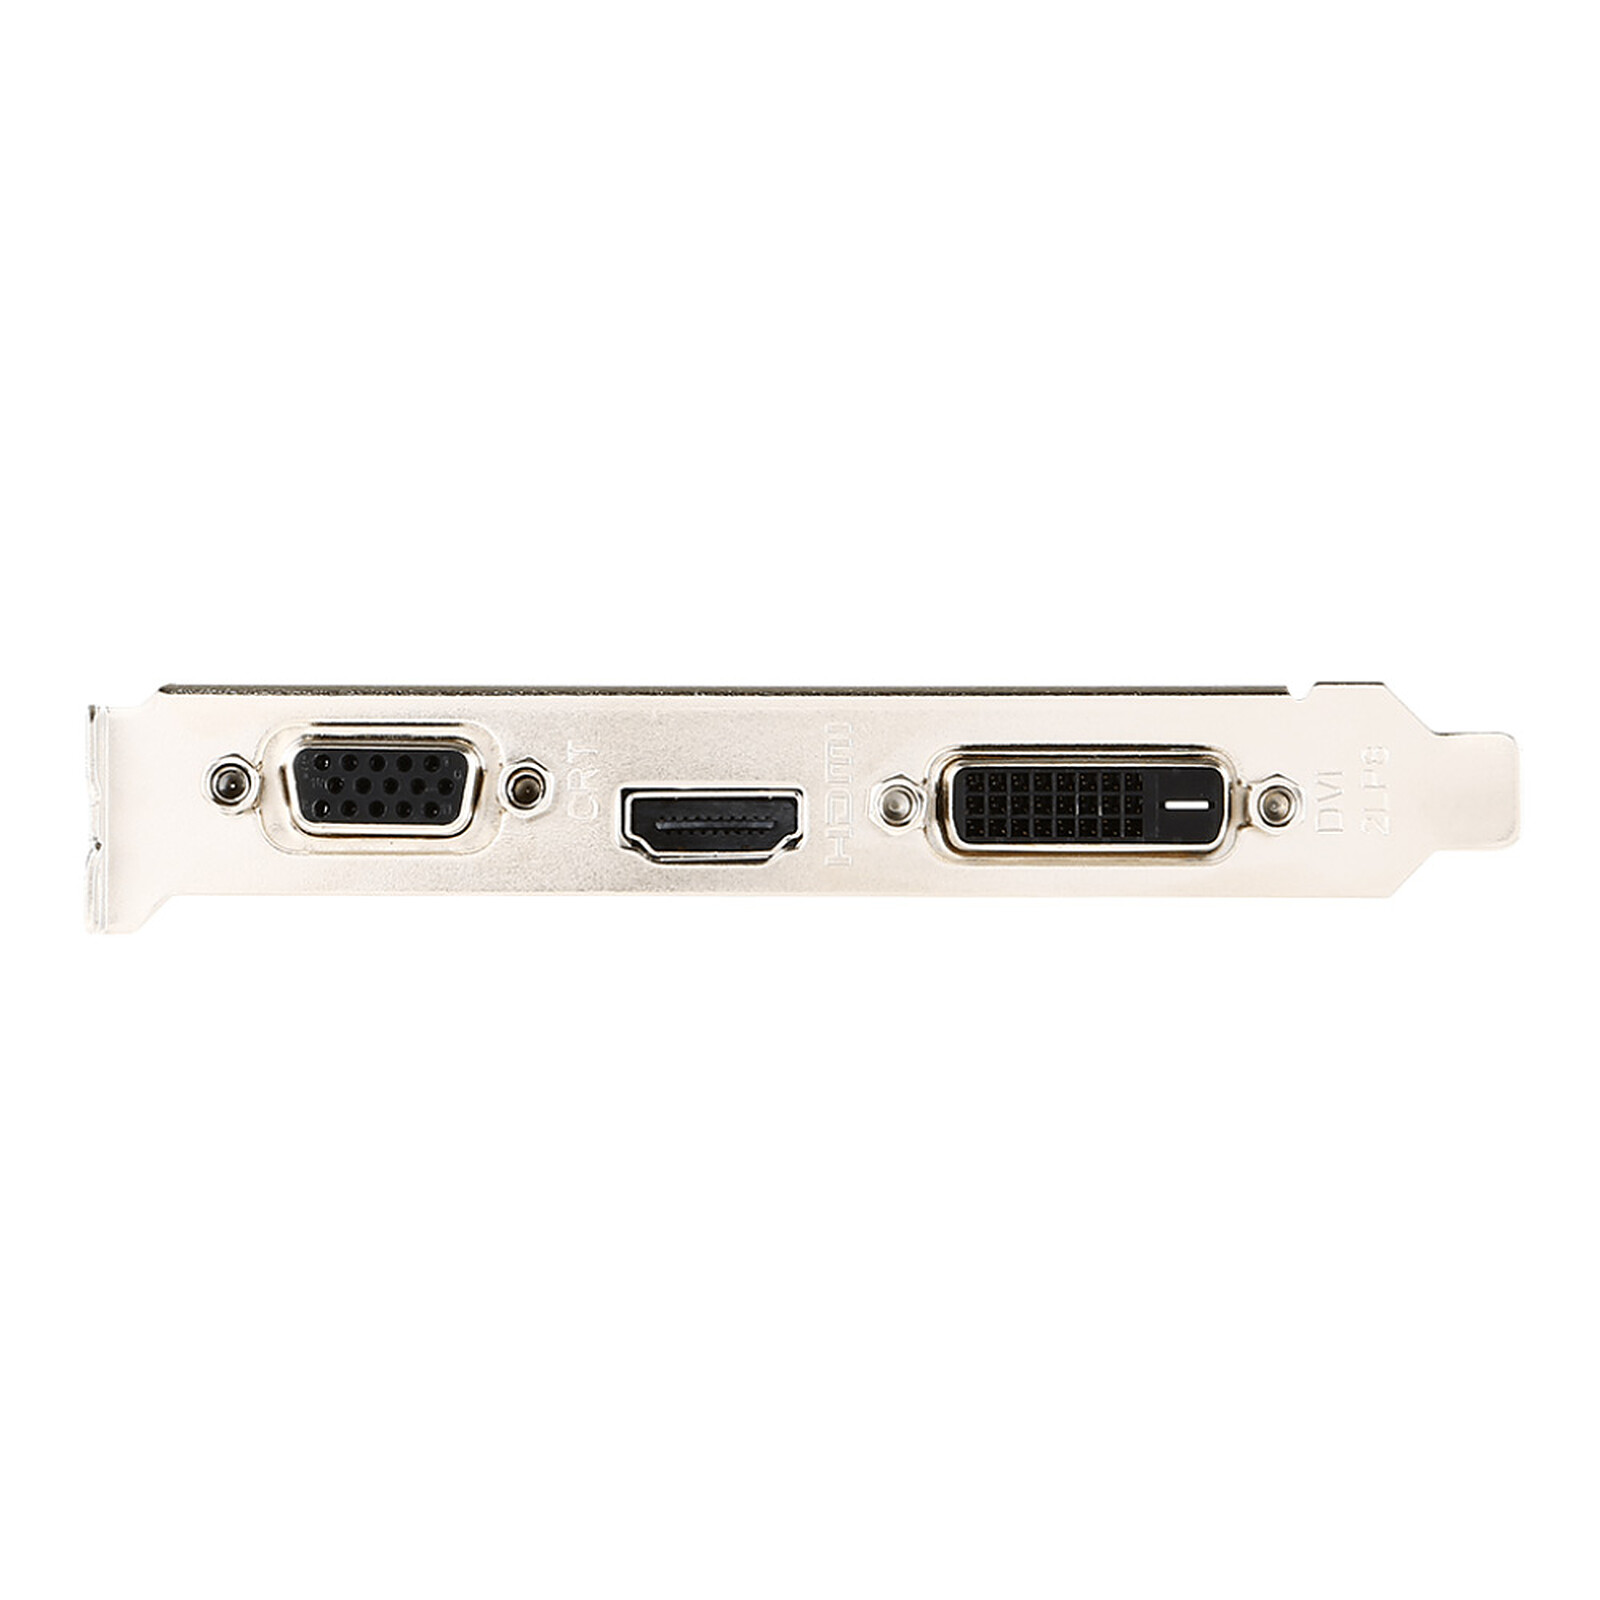  ZOTAC GeForce GT 710 1GB DDR3 PCI-E2.0 DL-DVI VGA HDMI